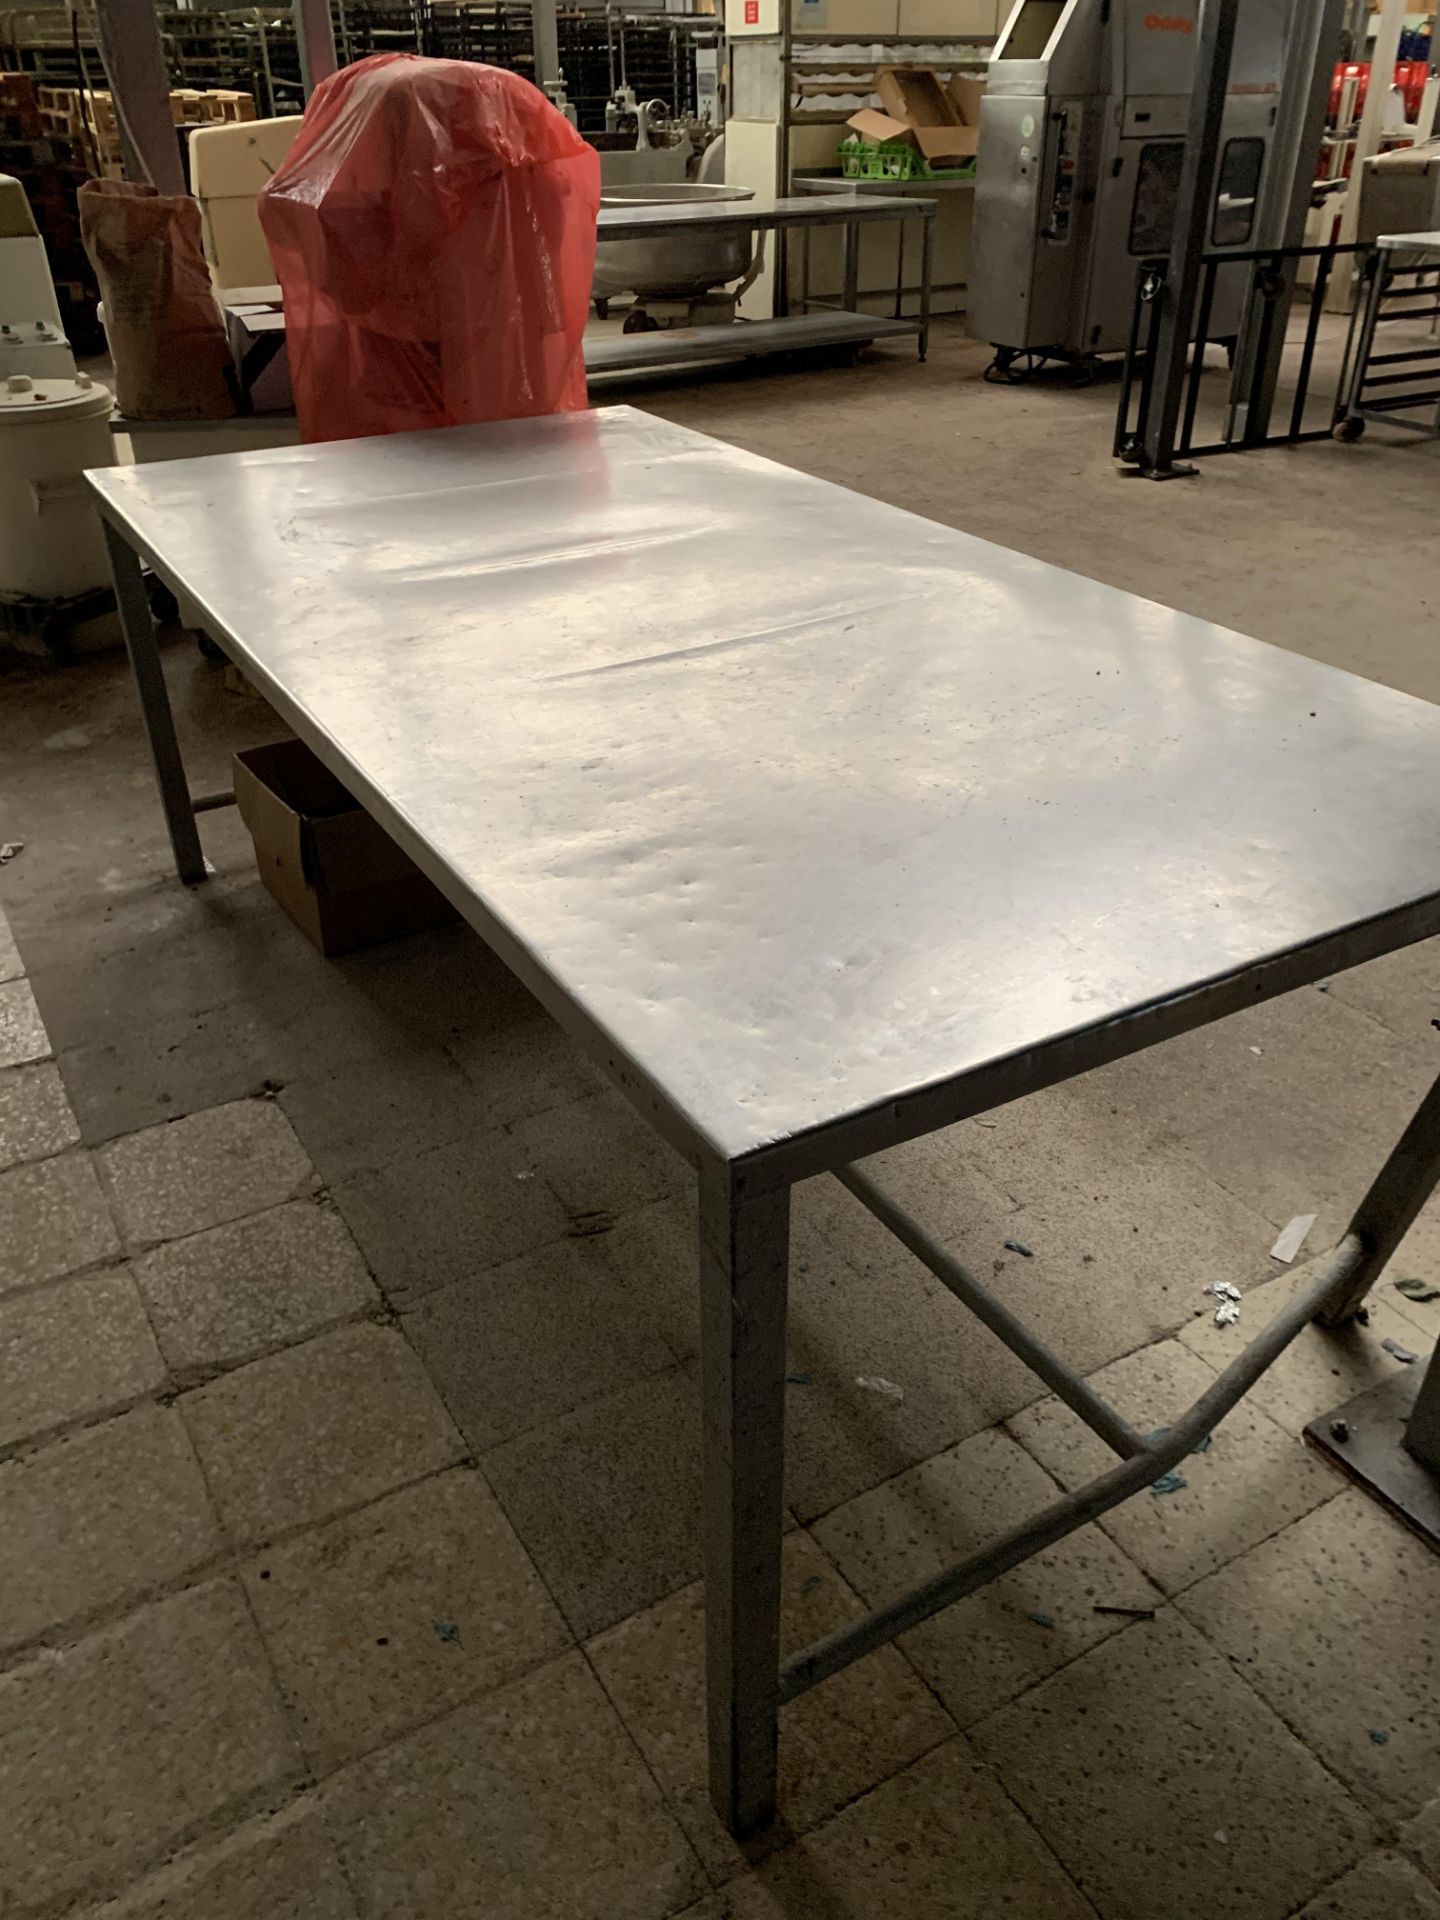 mild steel framed table approx. 8ft x 4 ft